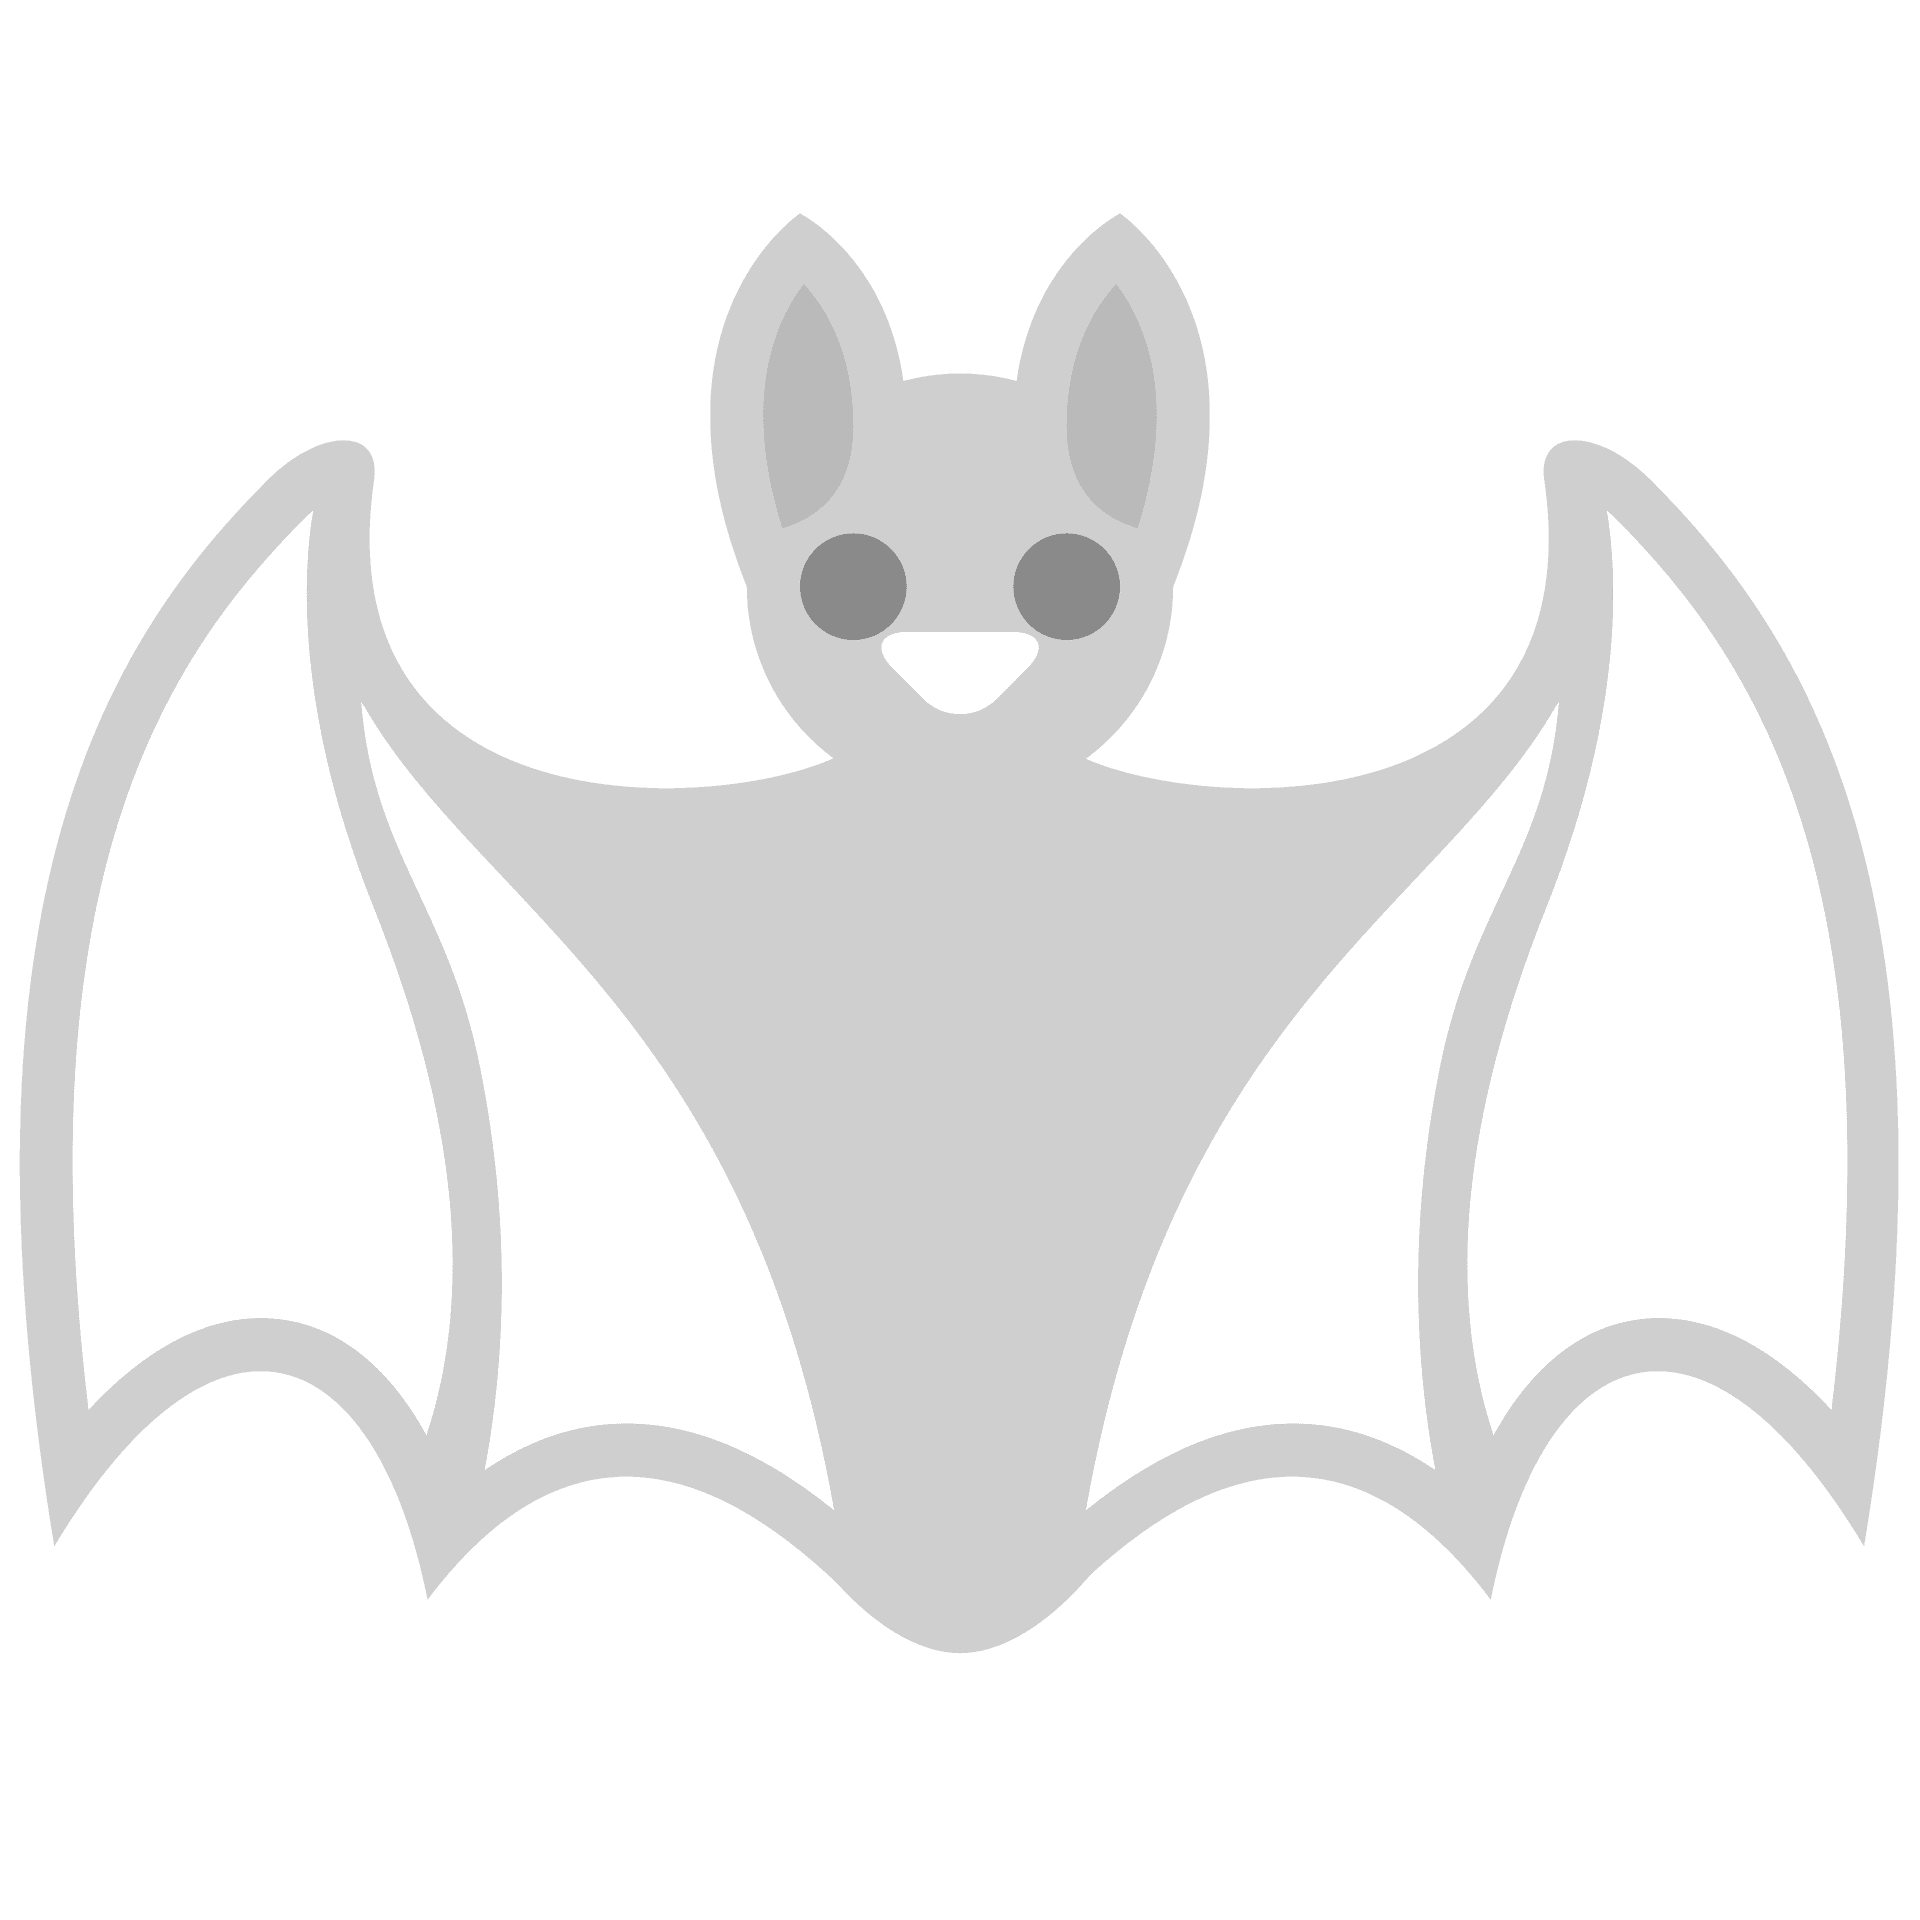 Dibujo para colorear de un murciélago